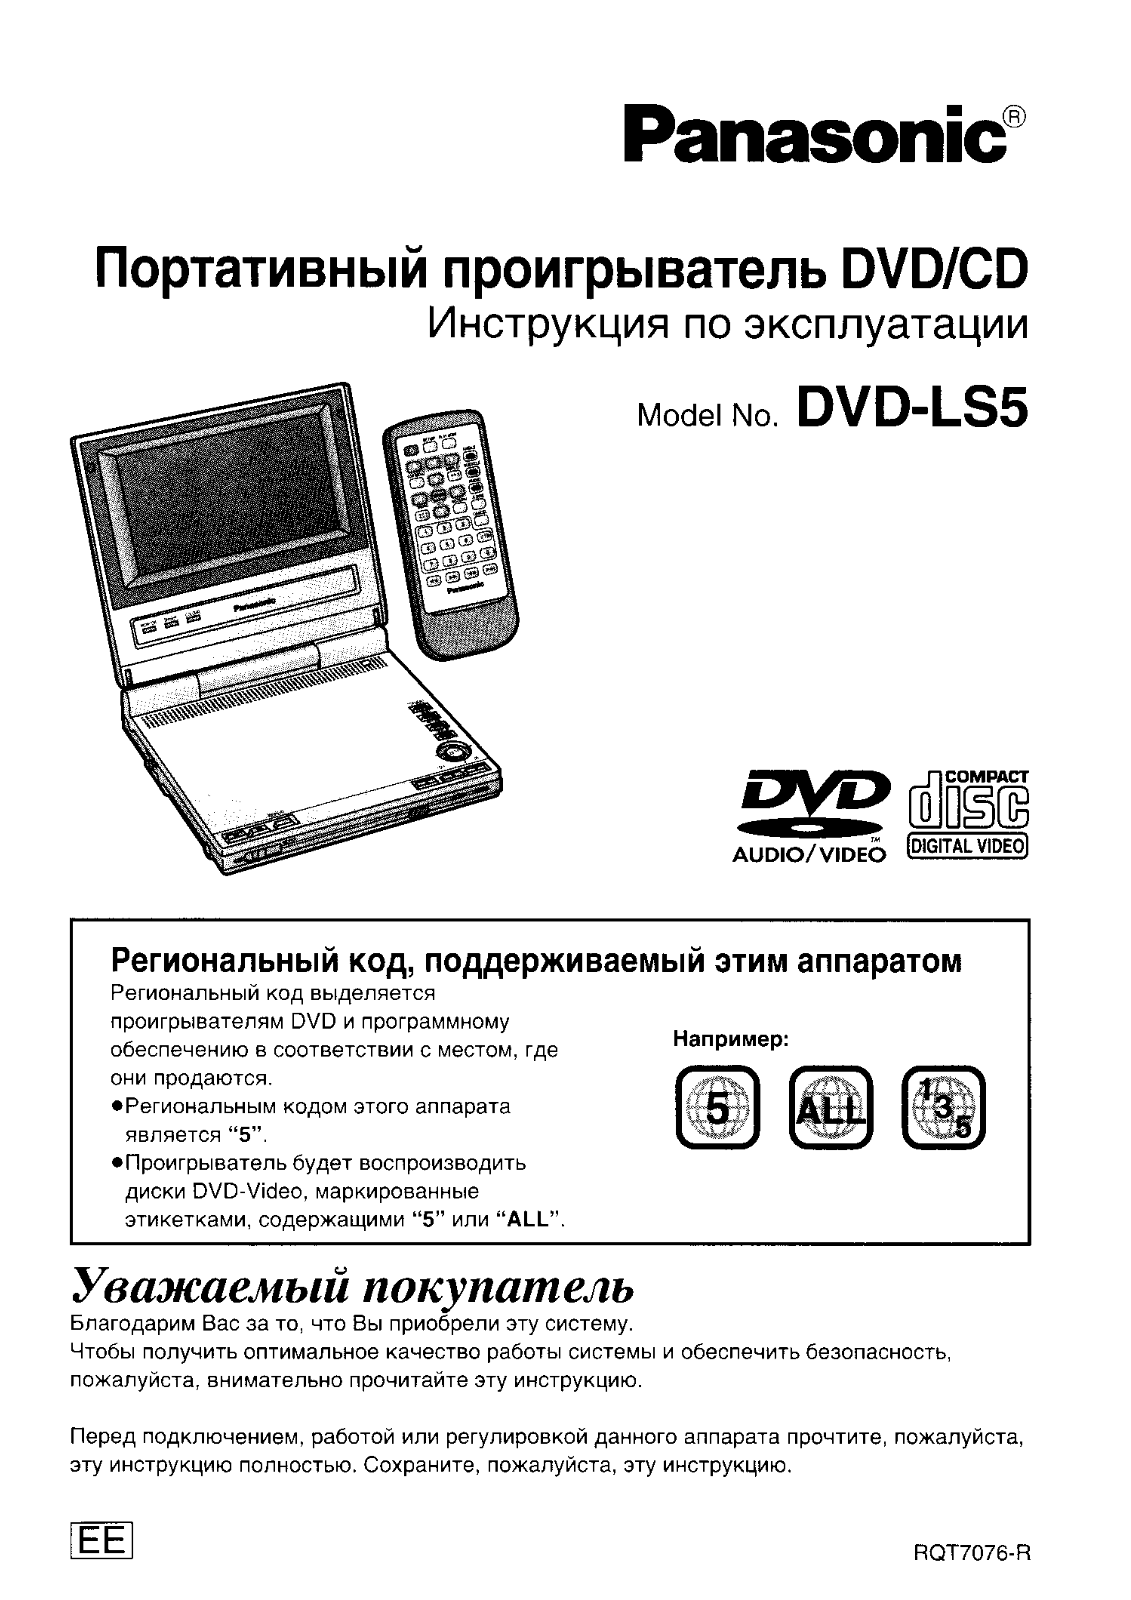 Panasonic DVD-LS5 User Manual